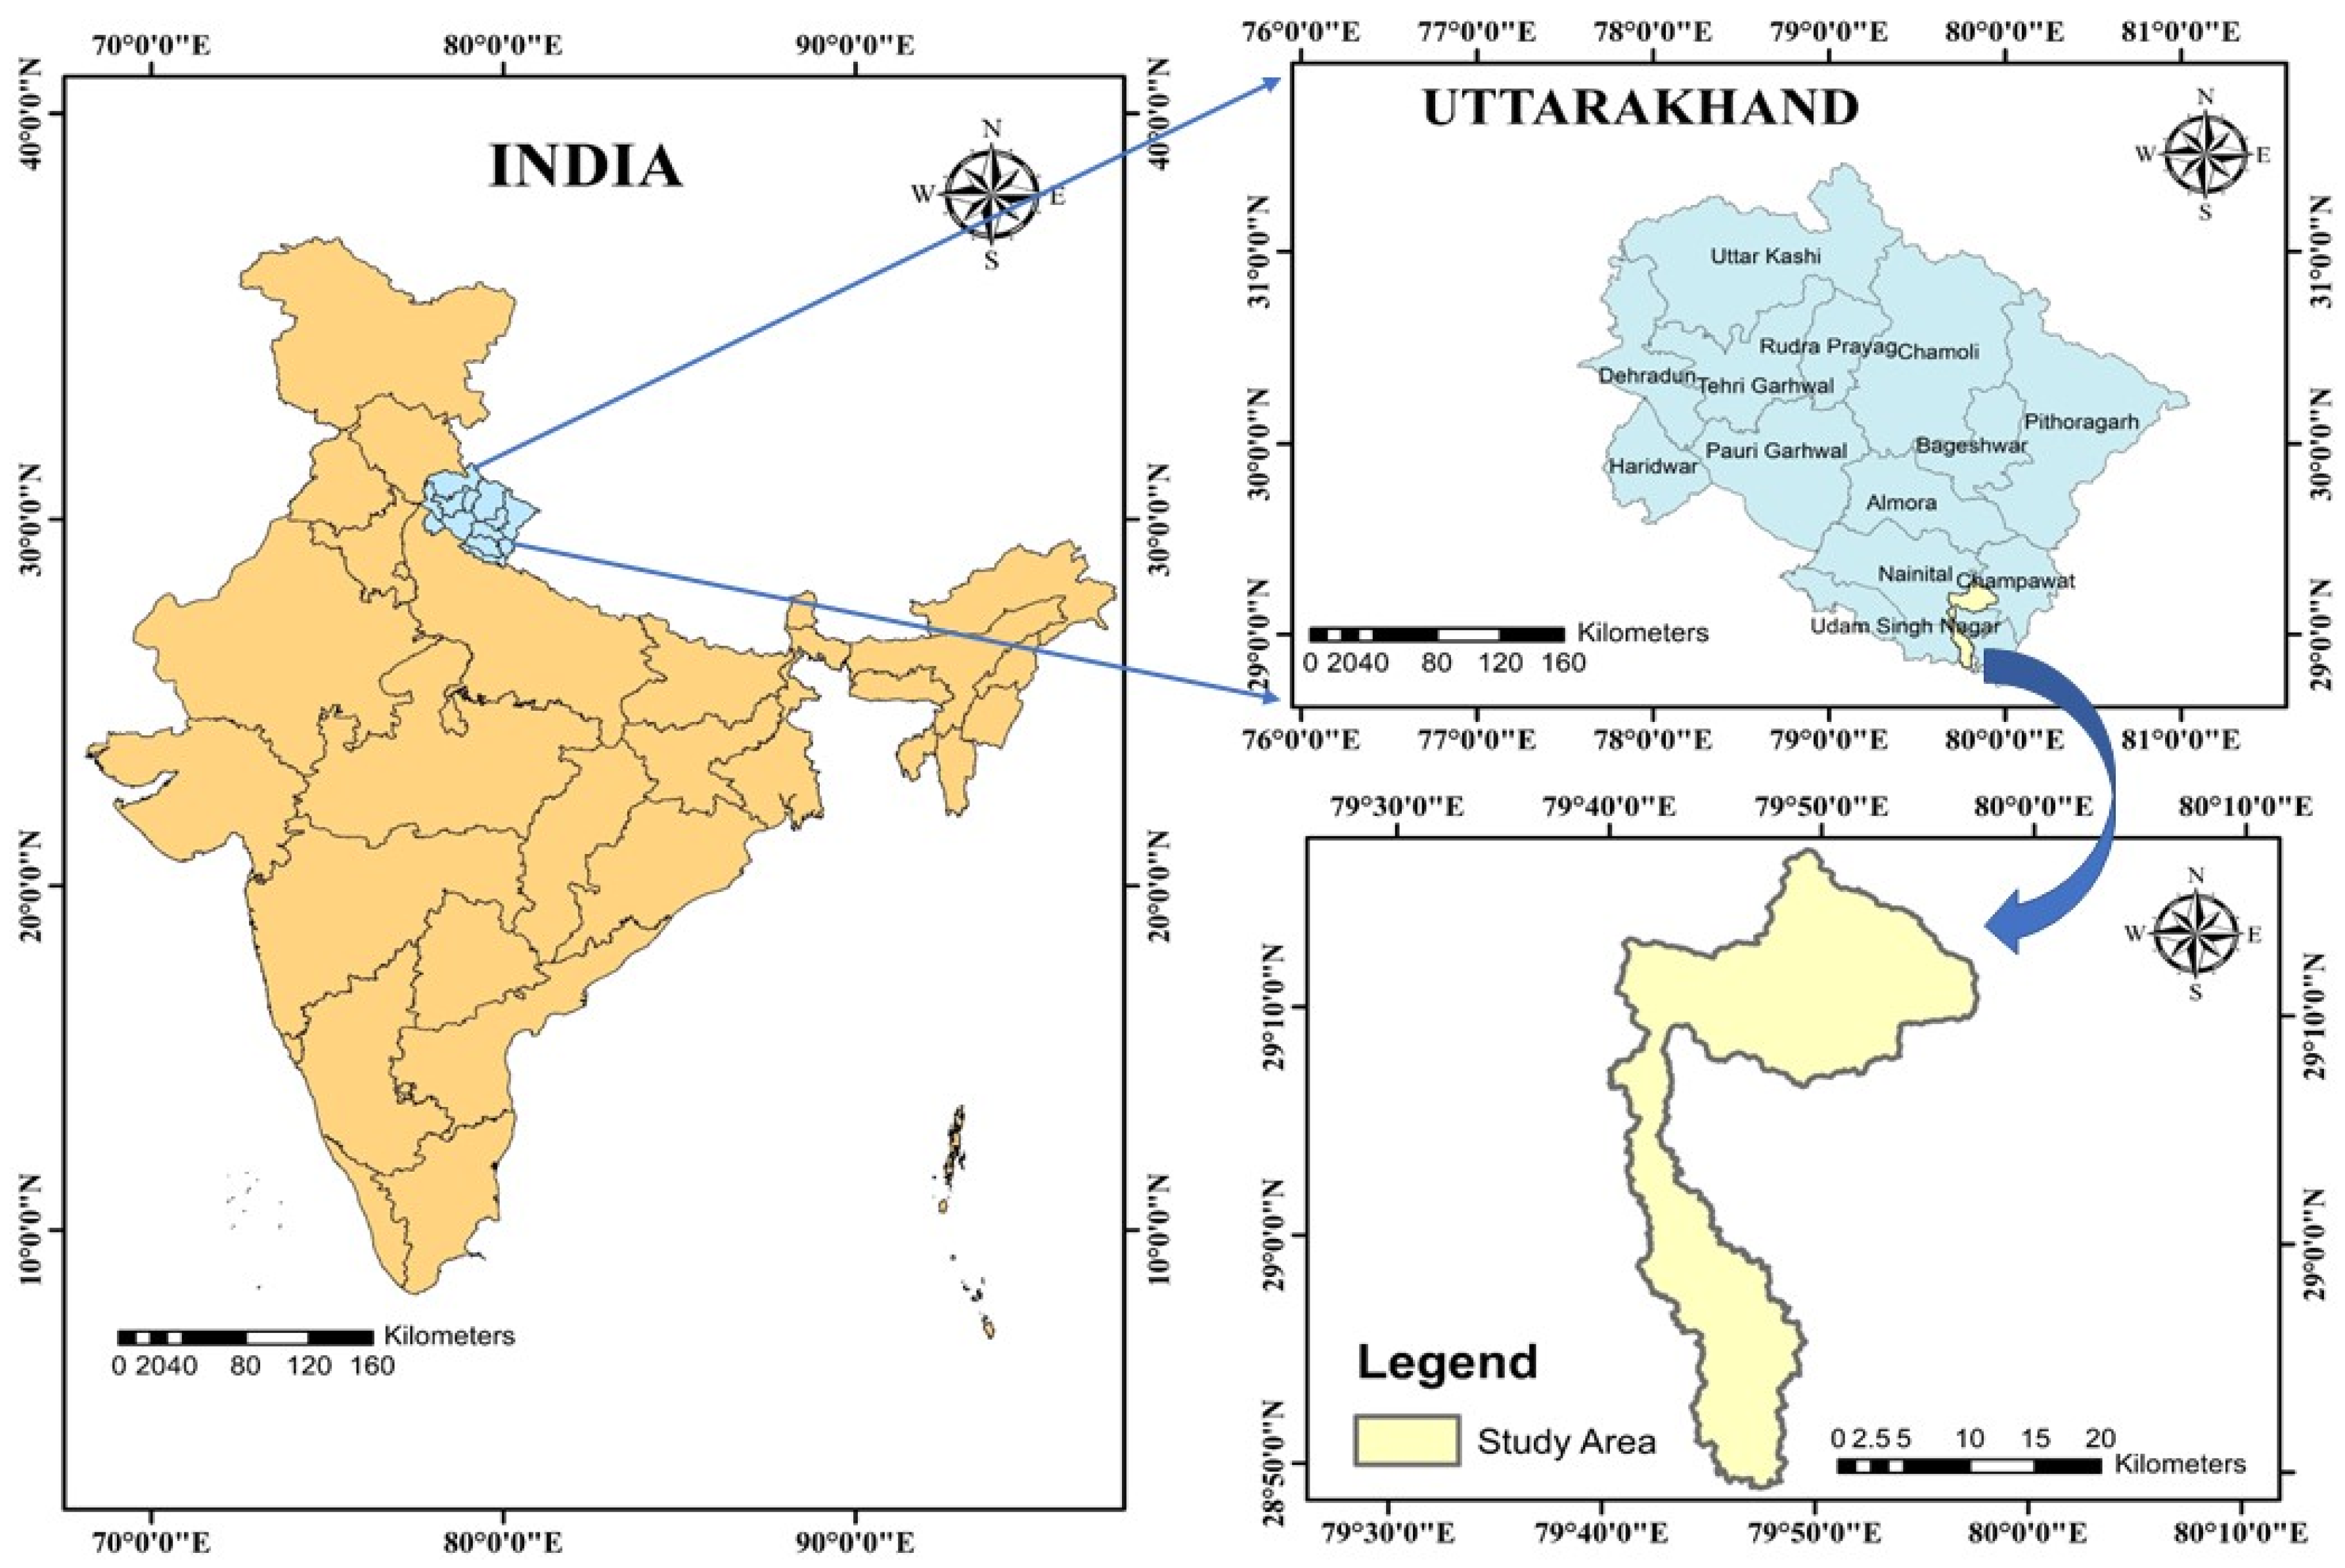 Elevation of Chitradurga, Karnataka, India - Topographic Map